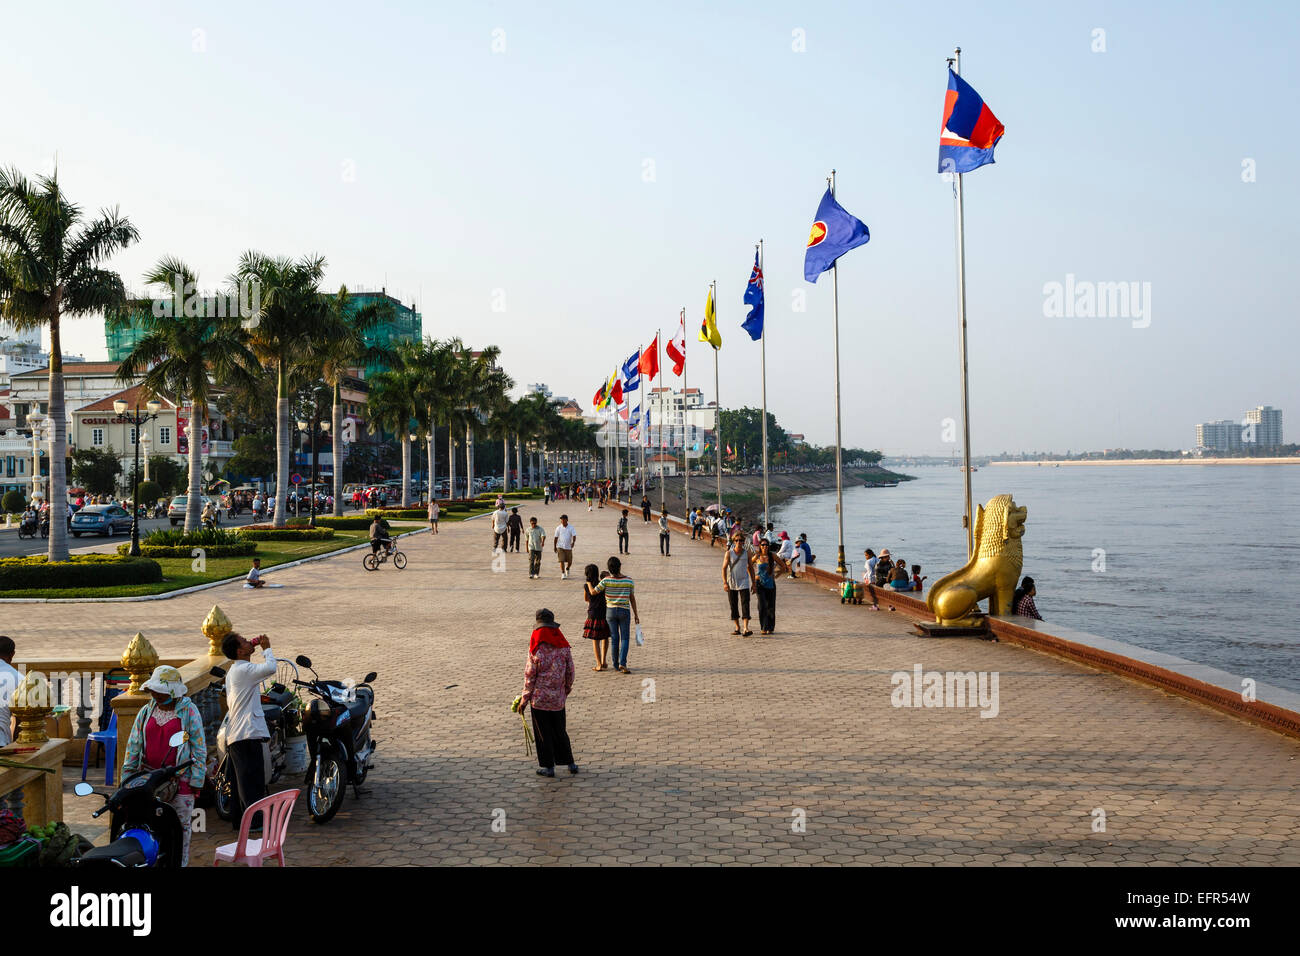 People at the riverfront promenade, Phnom Penh, Cambodia. Stock Photo